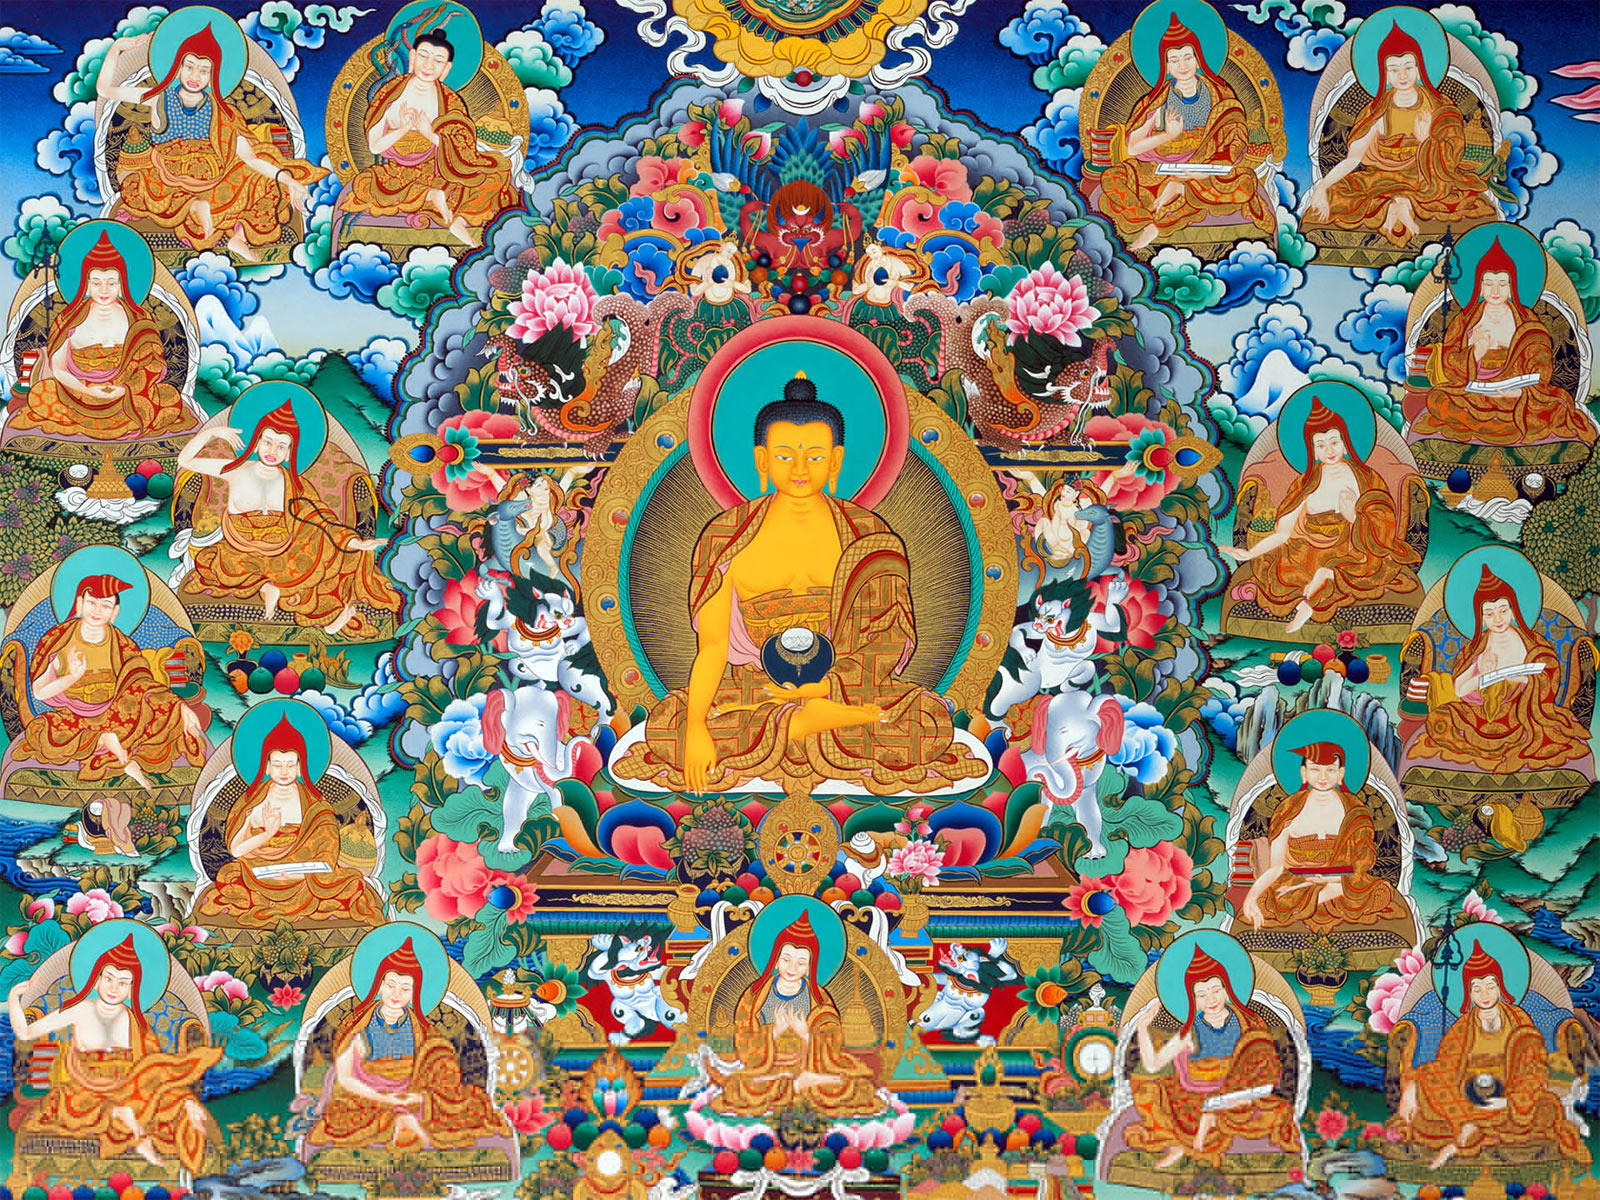 Free Buddhist Wallpaper and Screensavers - WallpaperSafari